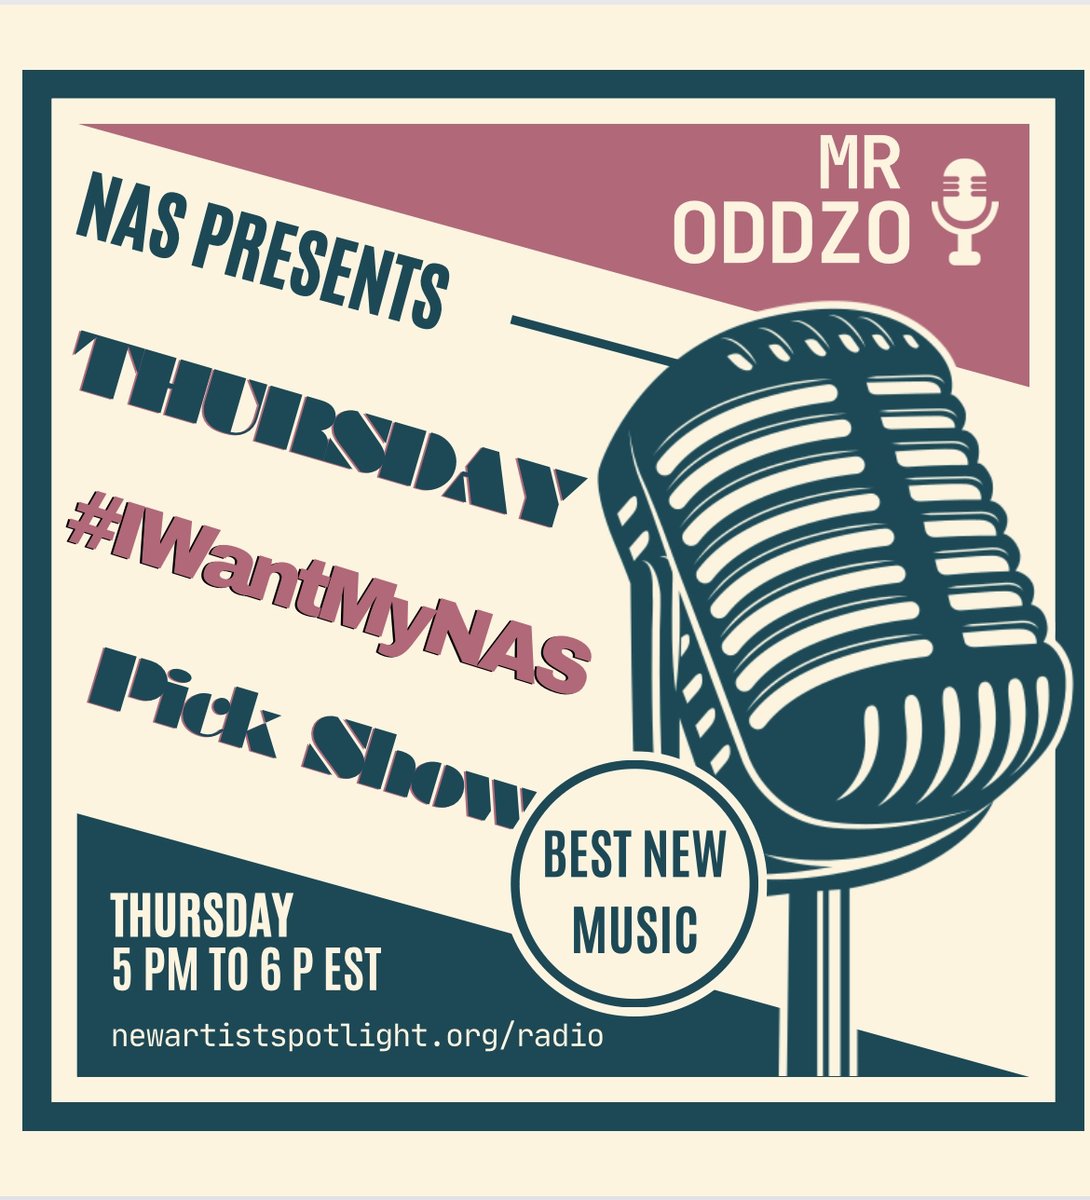 Today on @NASIndieRadio at 2PM PT | 5PM ET | 9PM GMT it's @MrOddzo 's Thursday Pick Show! 🎯 Freaturing @NAS_Spotlight pix @JasonJustly @bluescarrmusic @BillLovitt @TeleyIrons @bry_cooper @bigbaldbenmusic @DorianWhisper & a premiere from @AhlmPatrik newartistspotlight.org/radio